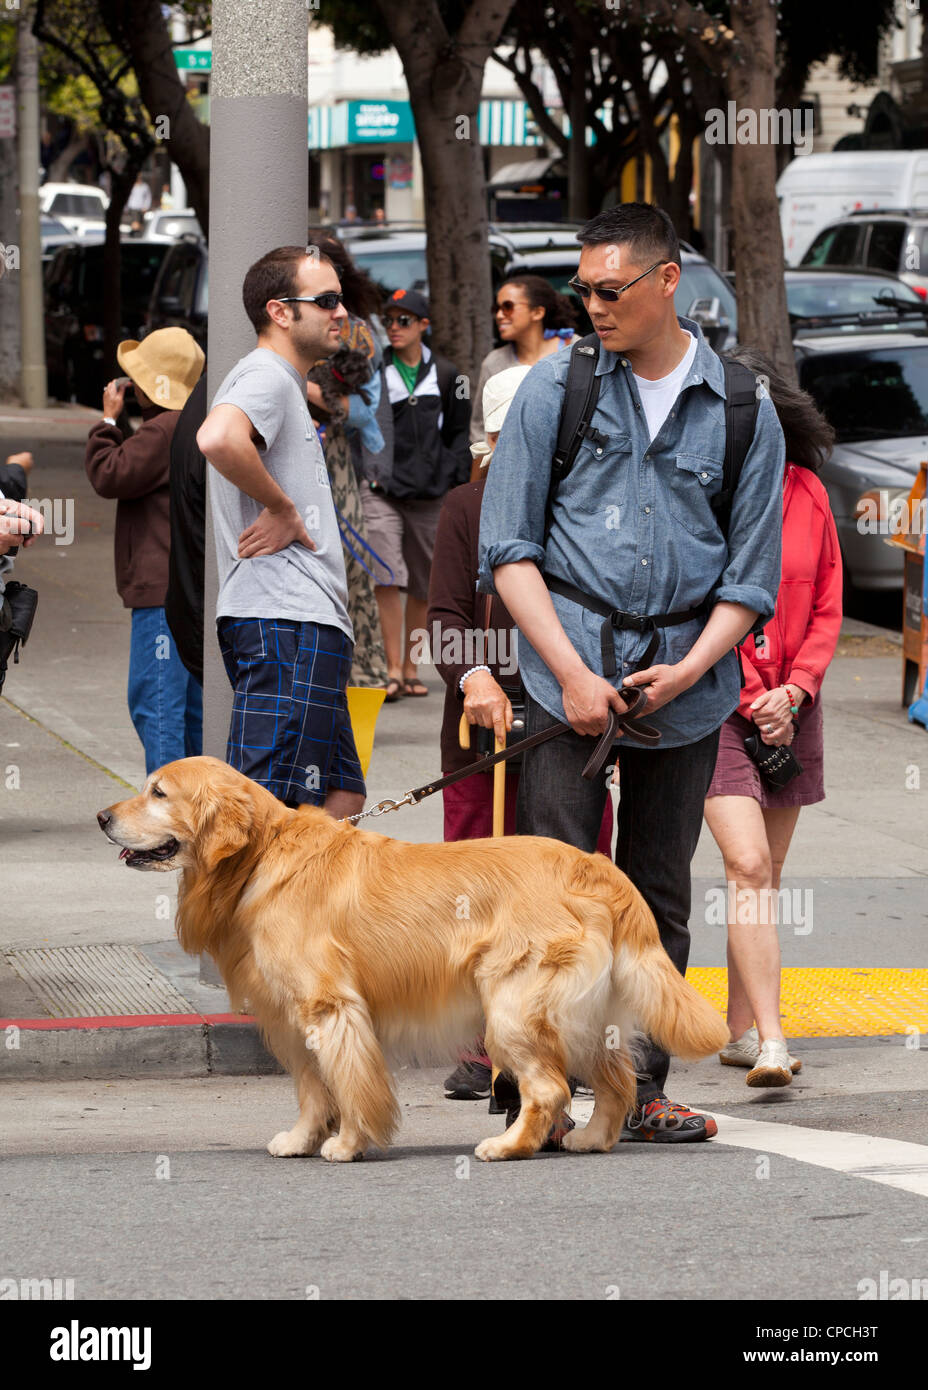 An Asian man standing with a golden retriever at a crosswalk Stock Photo